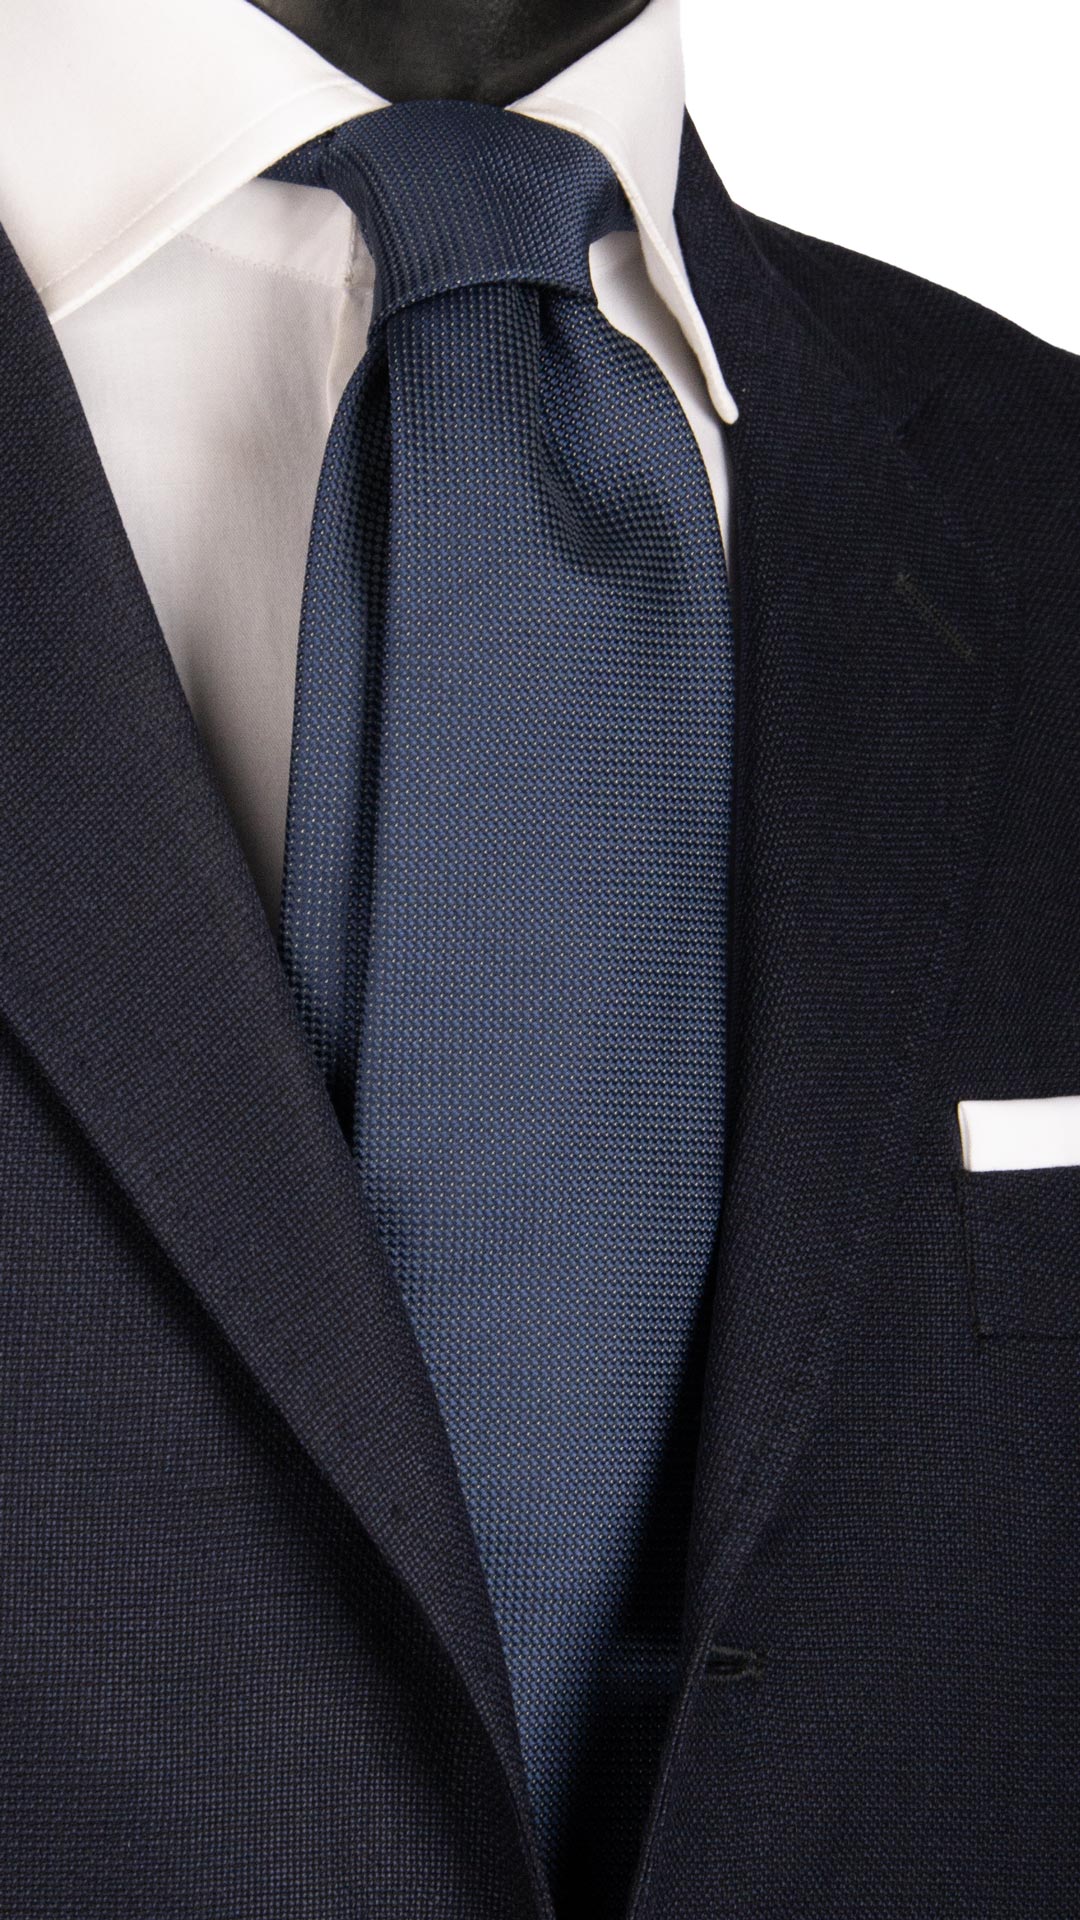 Cravatta da Cerimonia di Seta Blu Navy Grigia Made in Italy Graffeo Cravatte